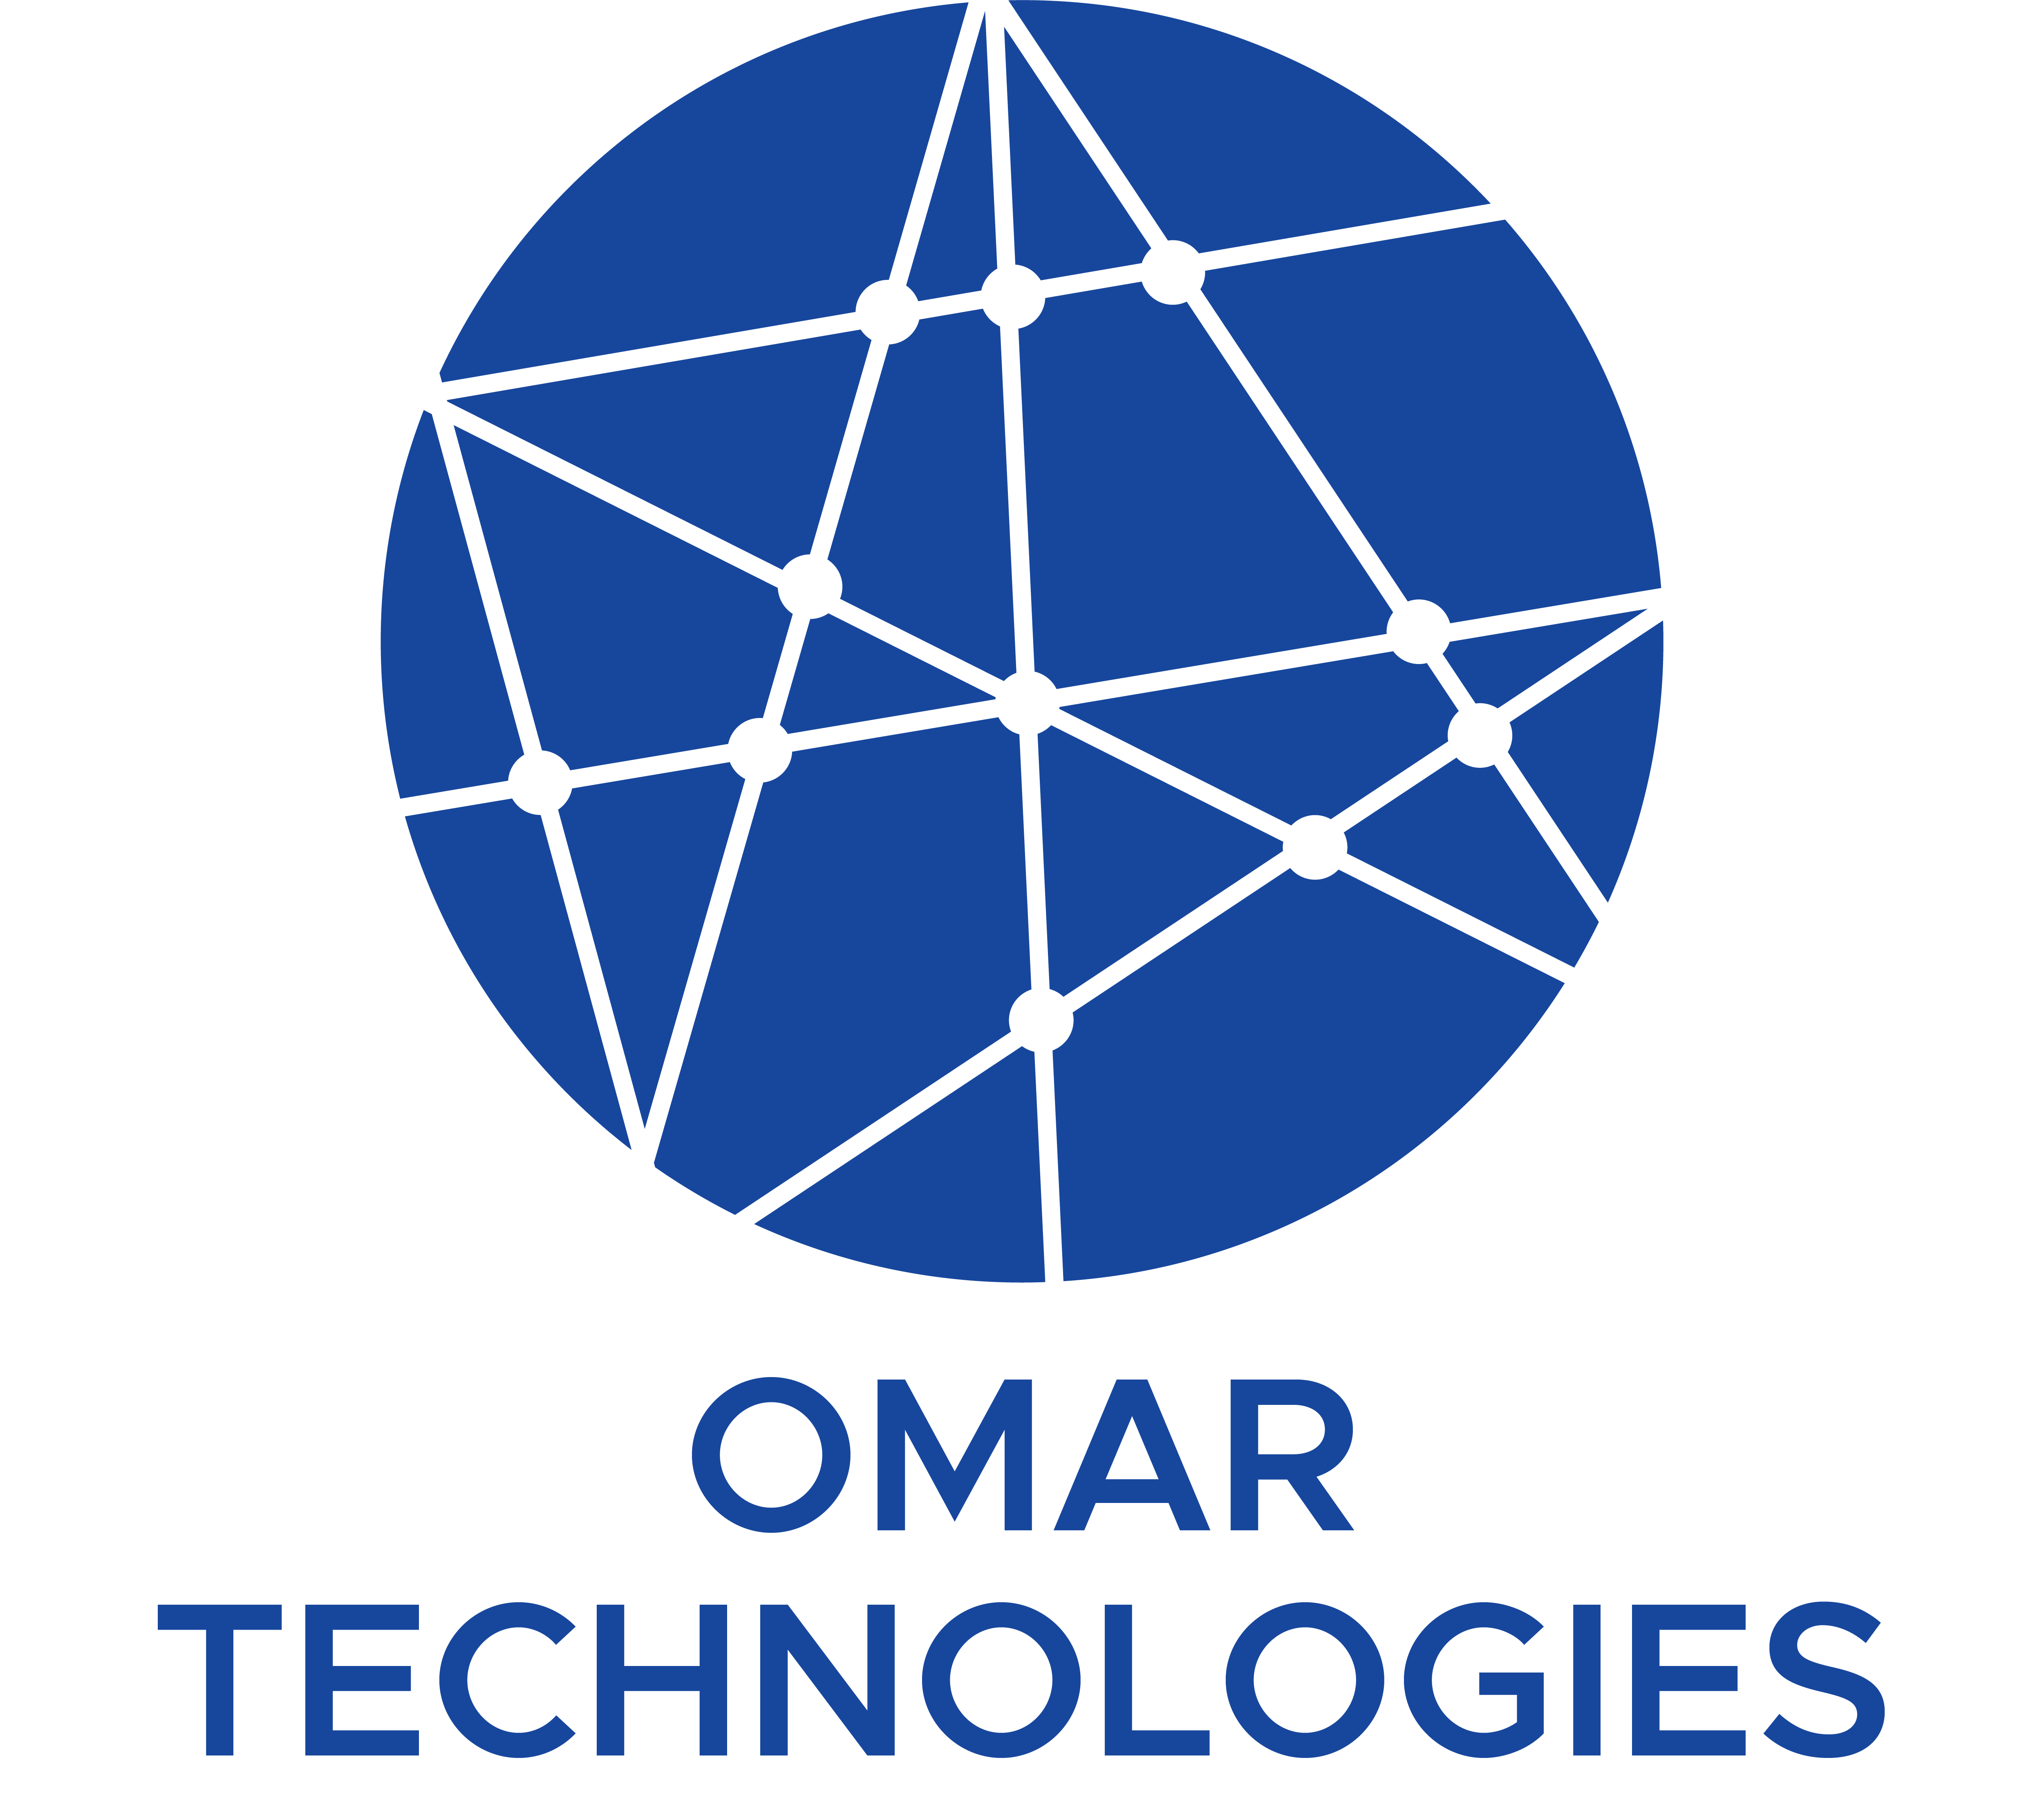 omar technologies logo